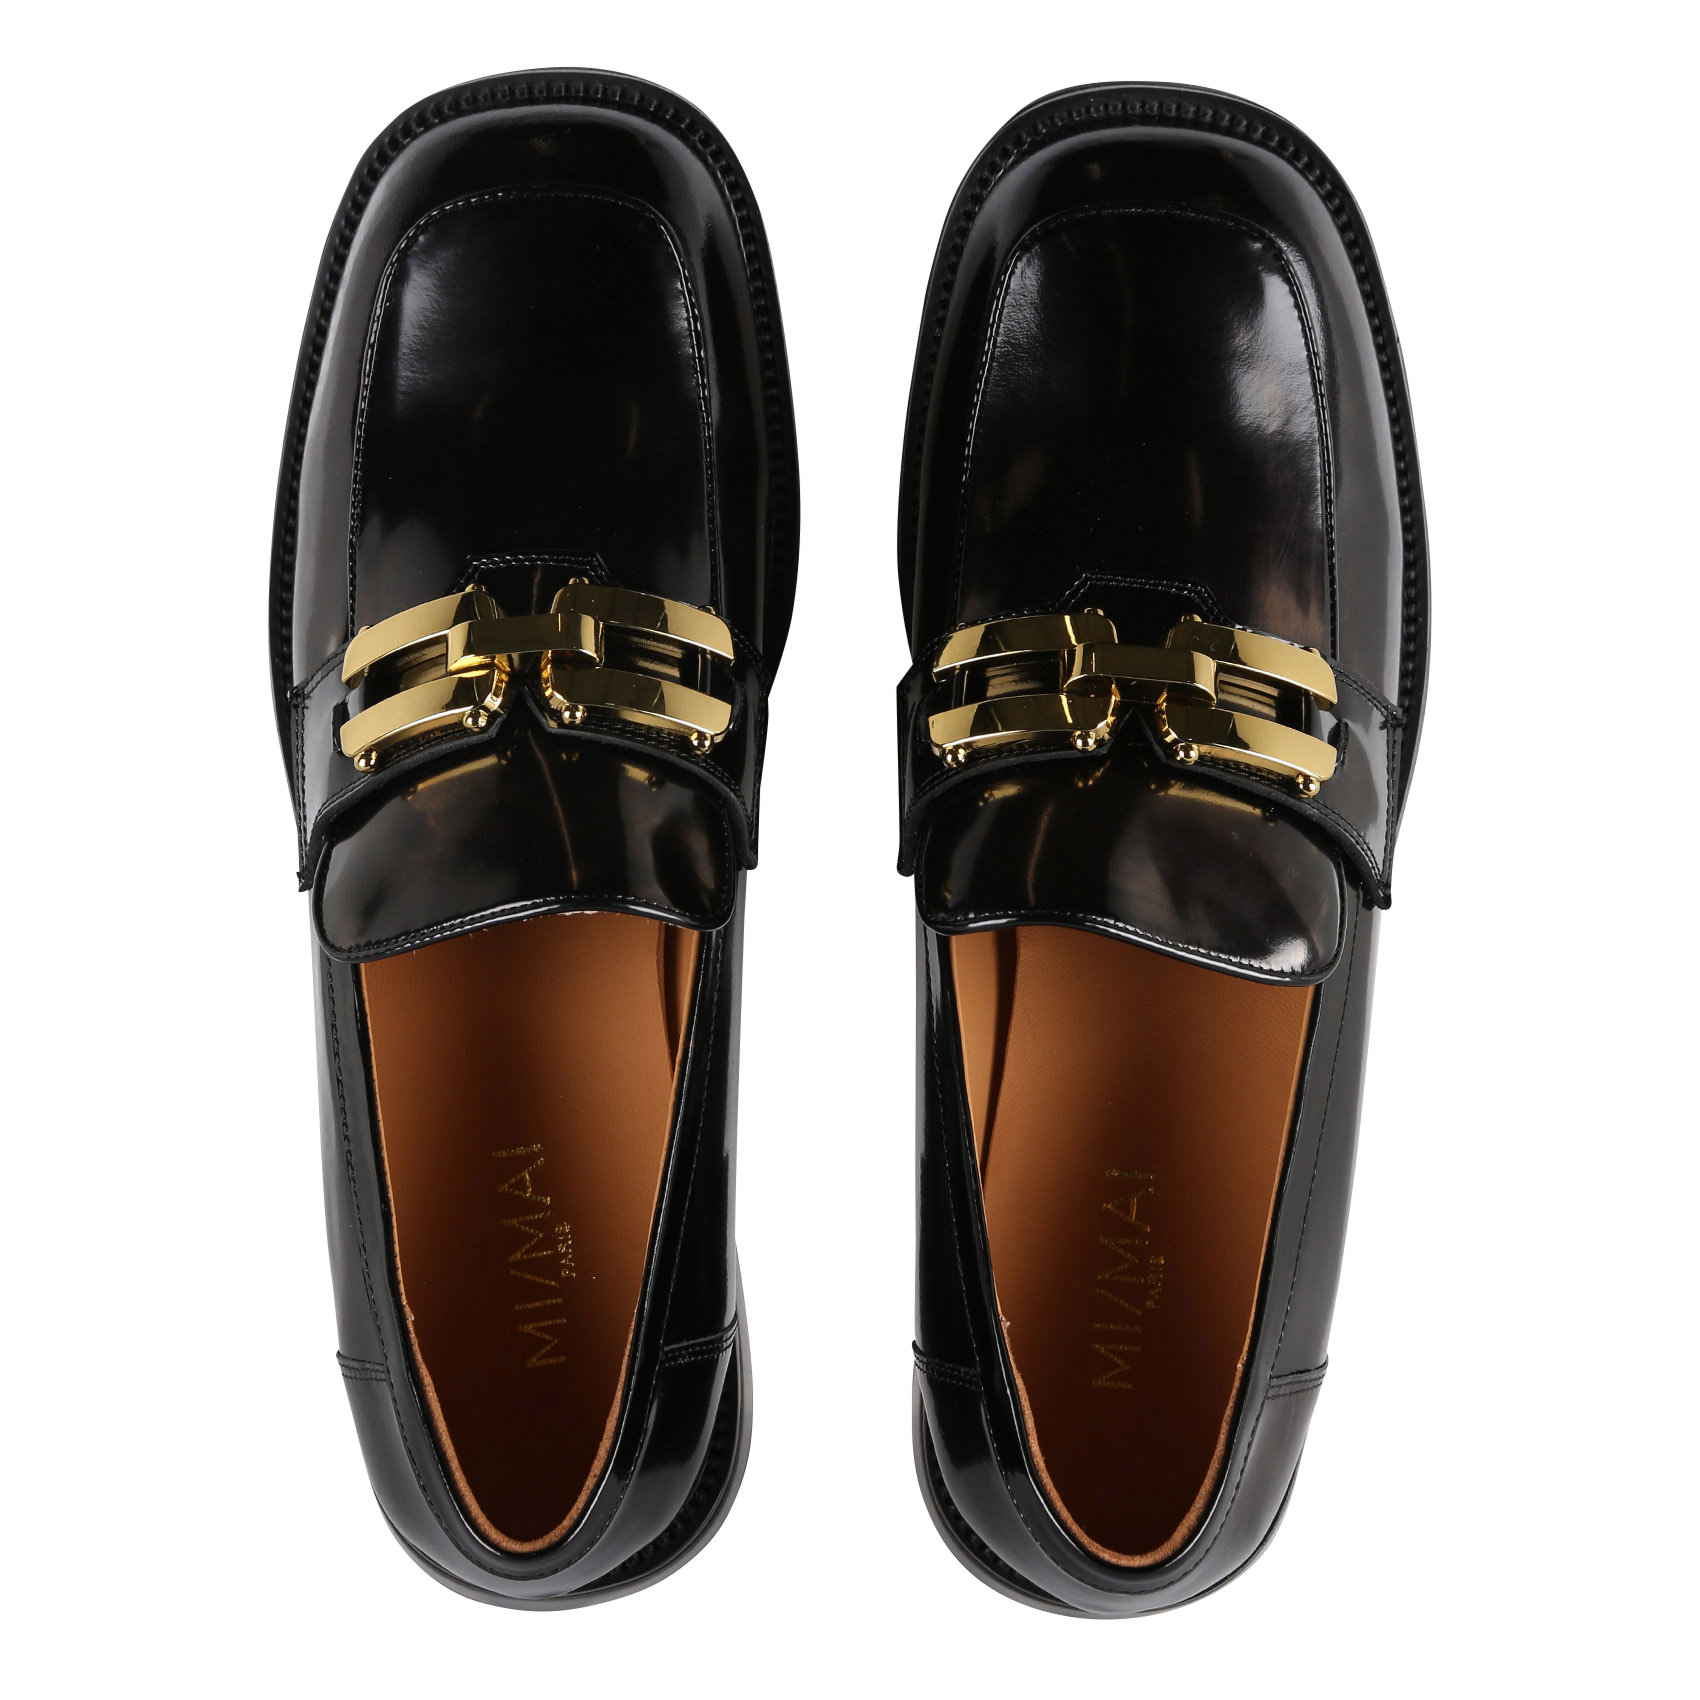 Schoenen Pumps Loafers Bronx Loafers zwart elegant 